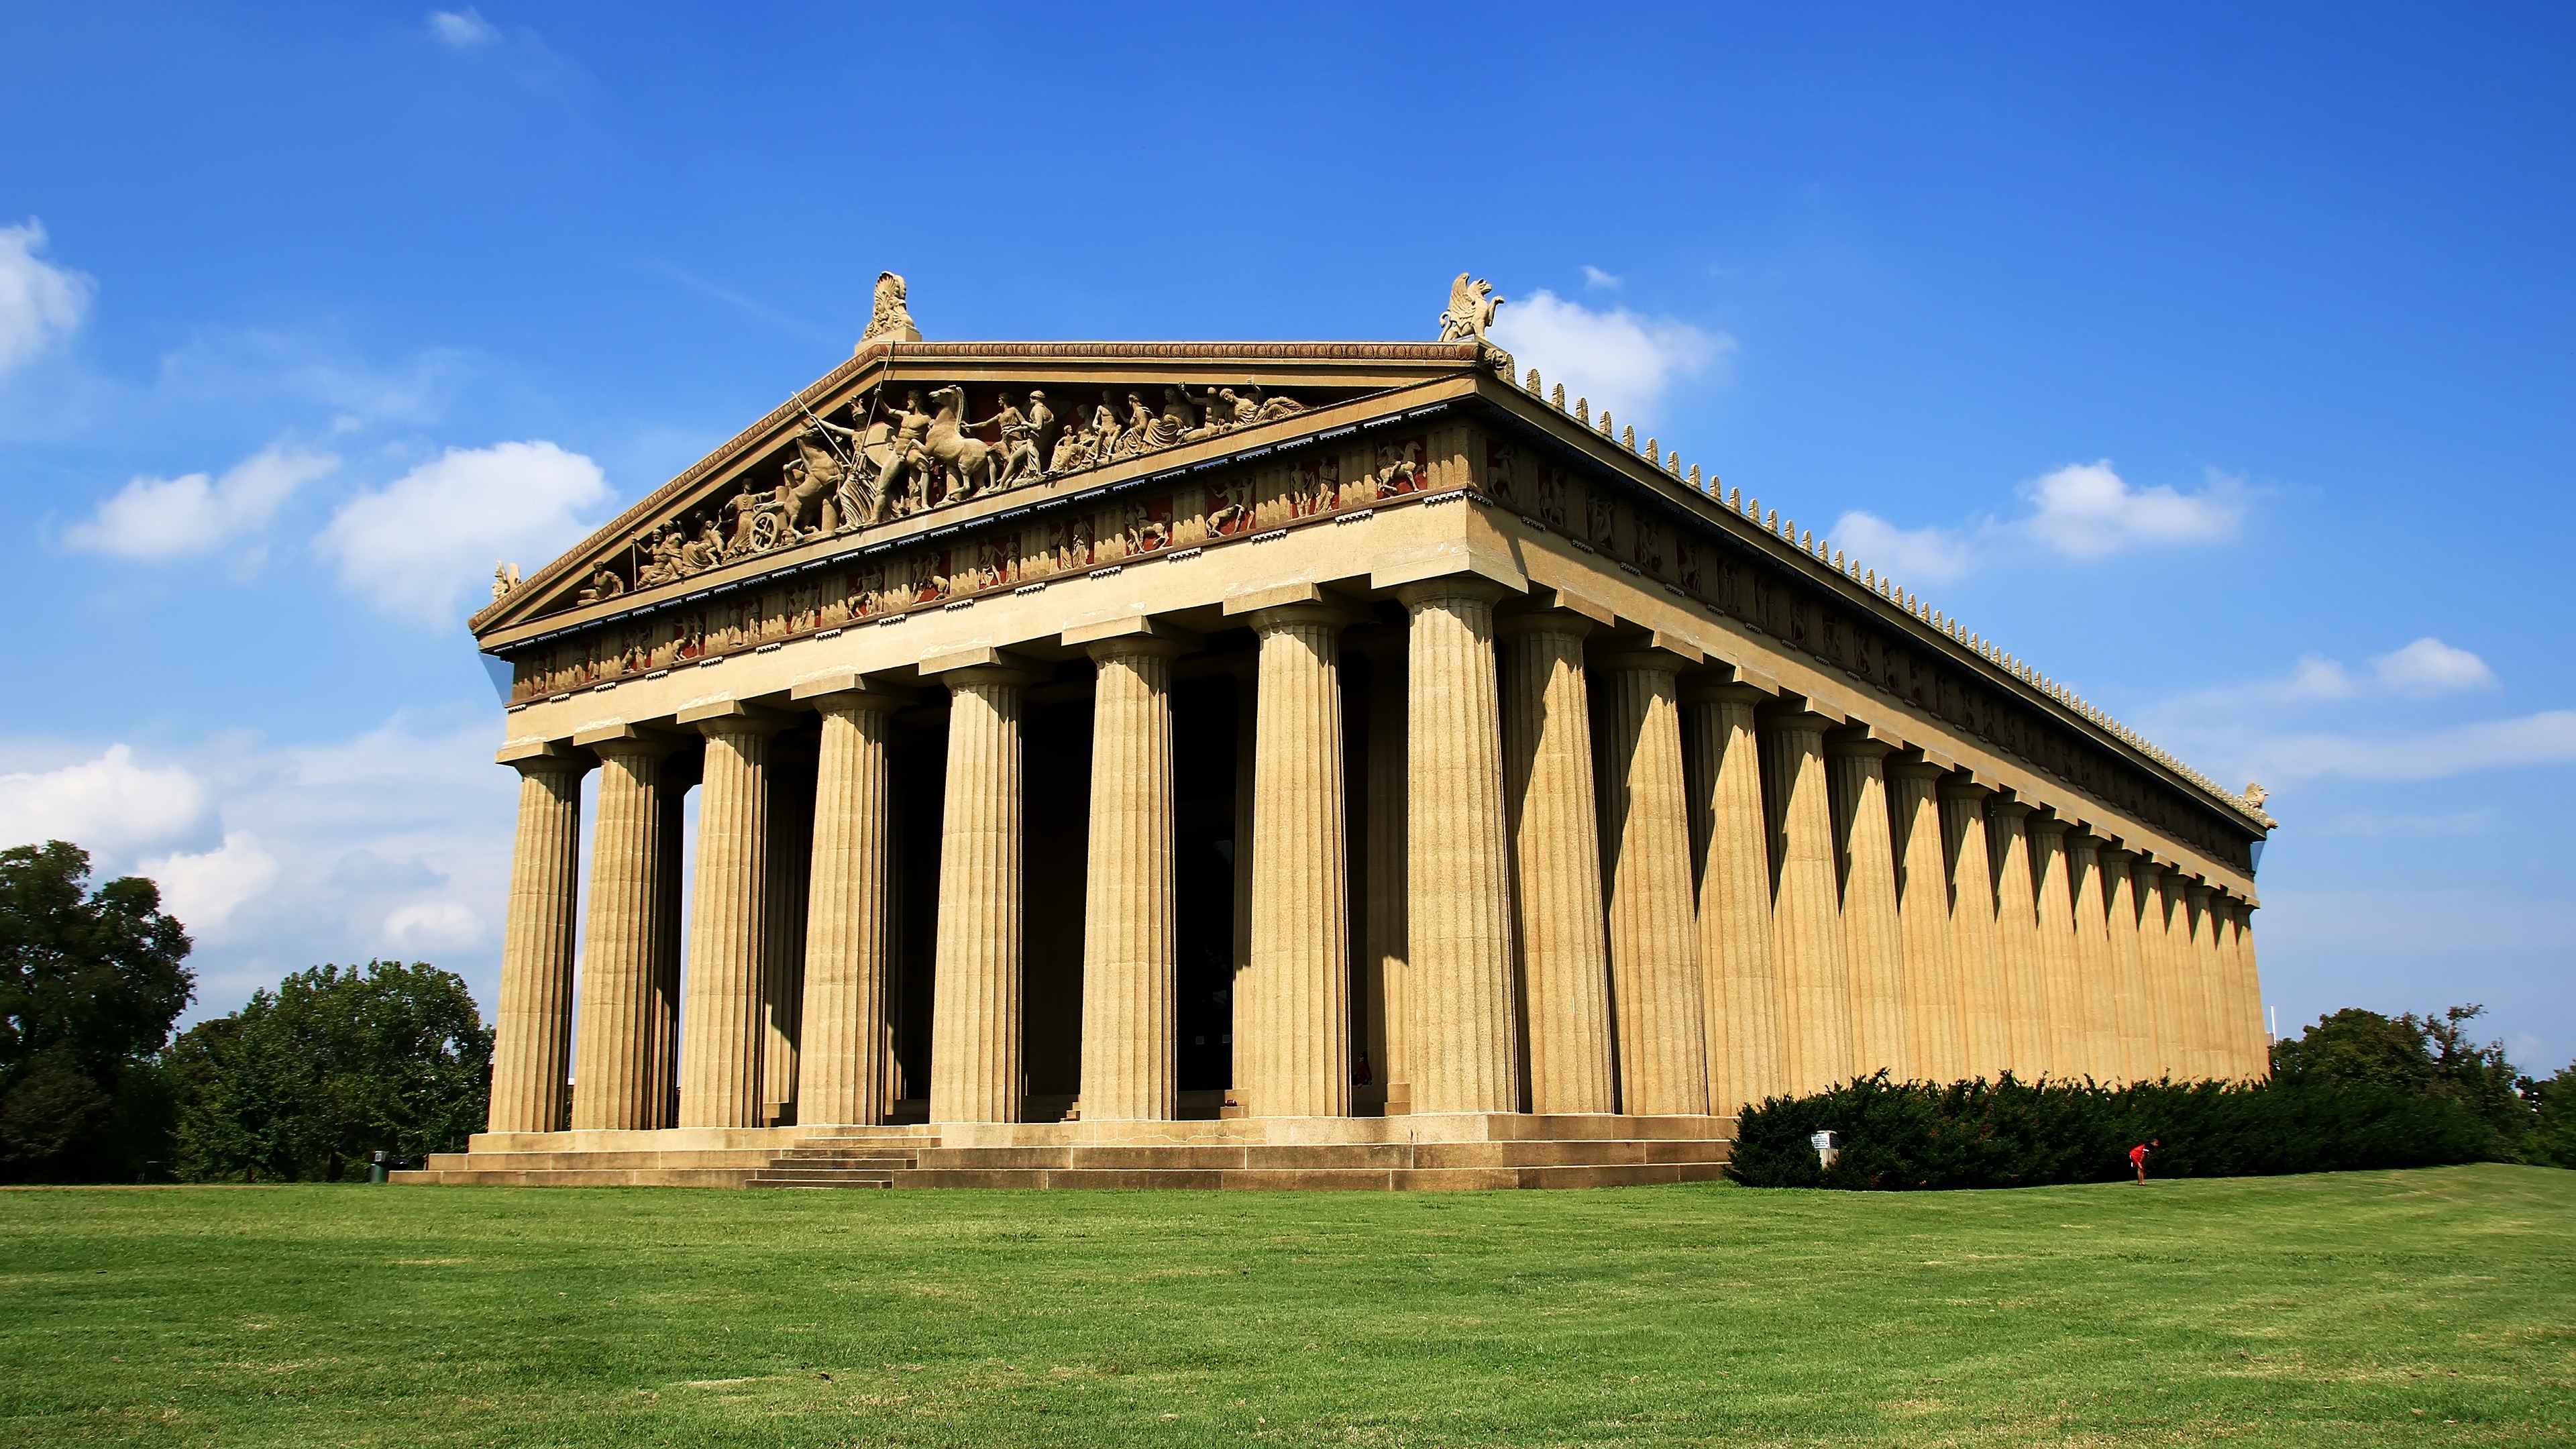 Parthenon Nashville for 3840 x 2160 Ultra HD resolution